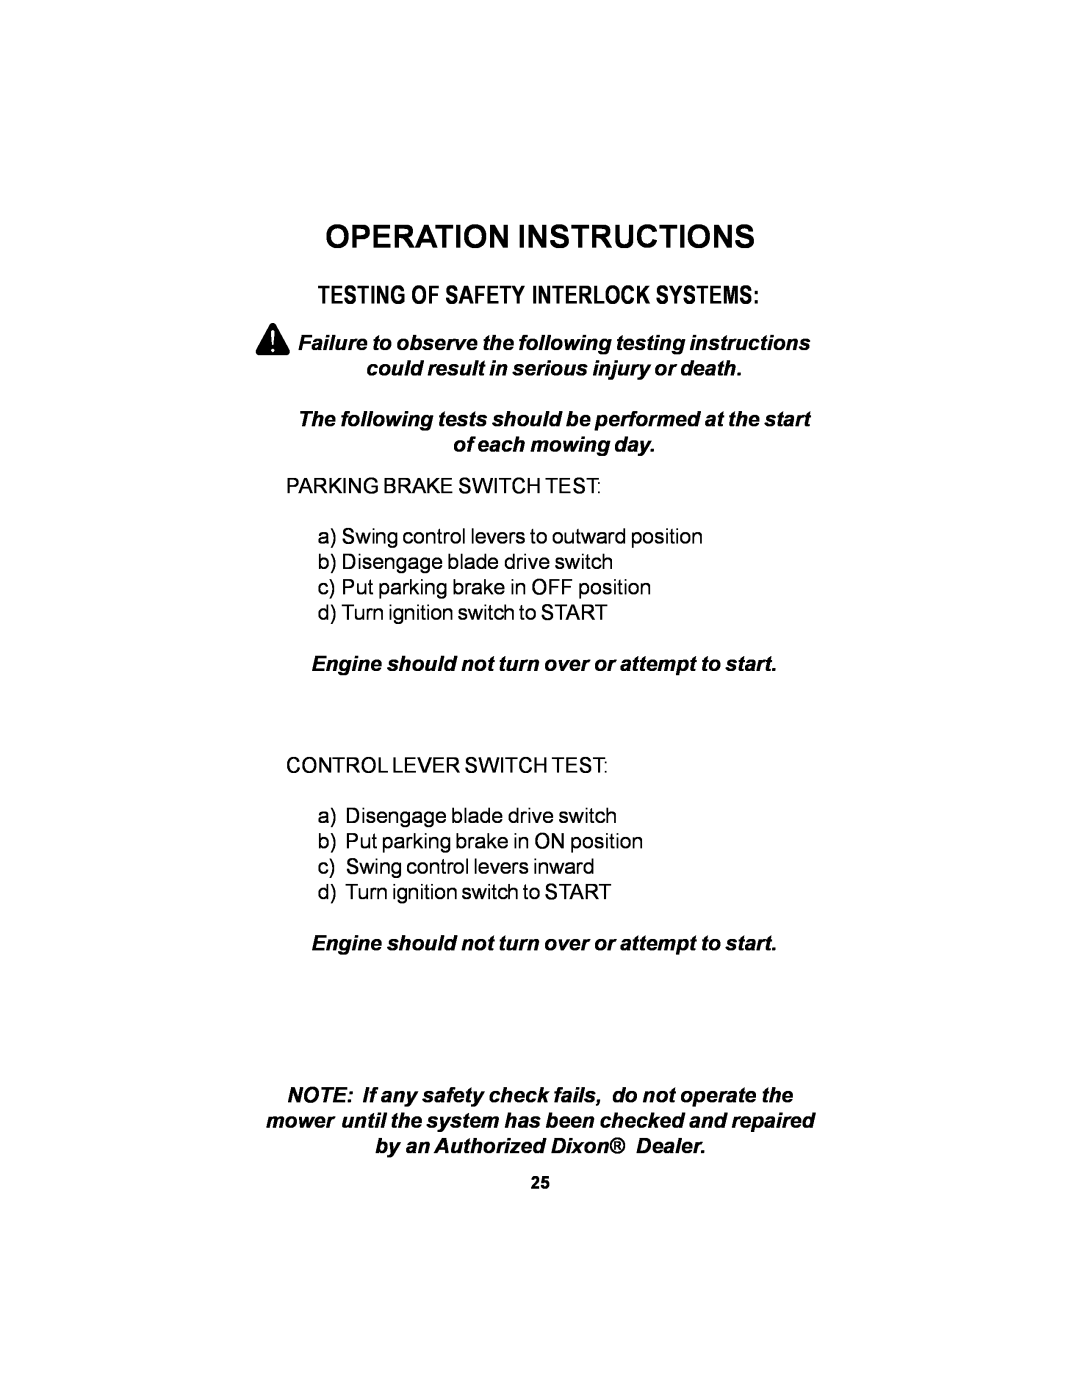 Dixon Black Bear manual Testing Of Safety Interlock Systems, Operation Instructions 